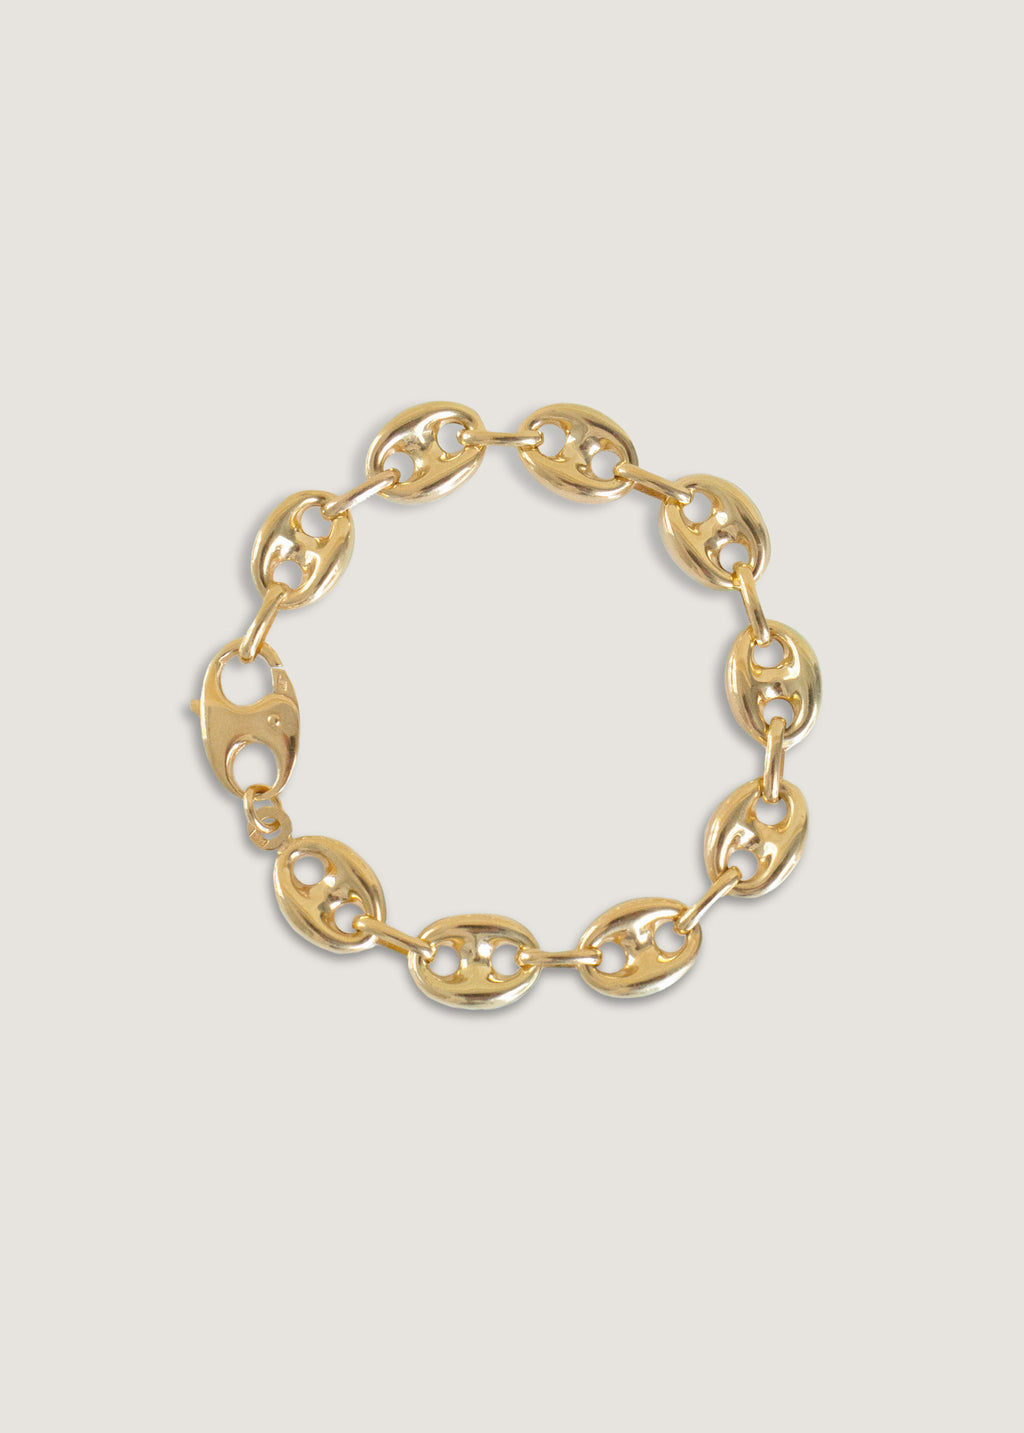 alt="Puffed Mariner Chain Bracelet 14k YG"